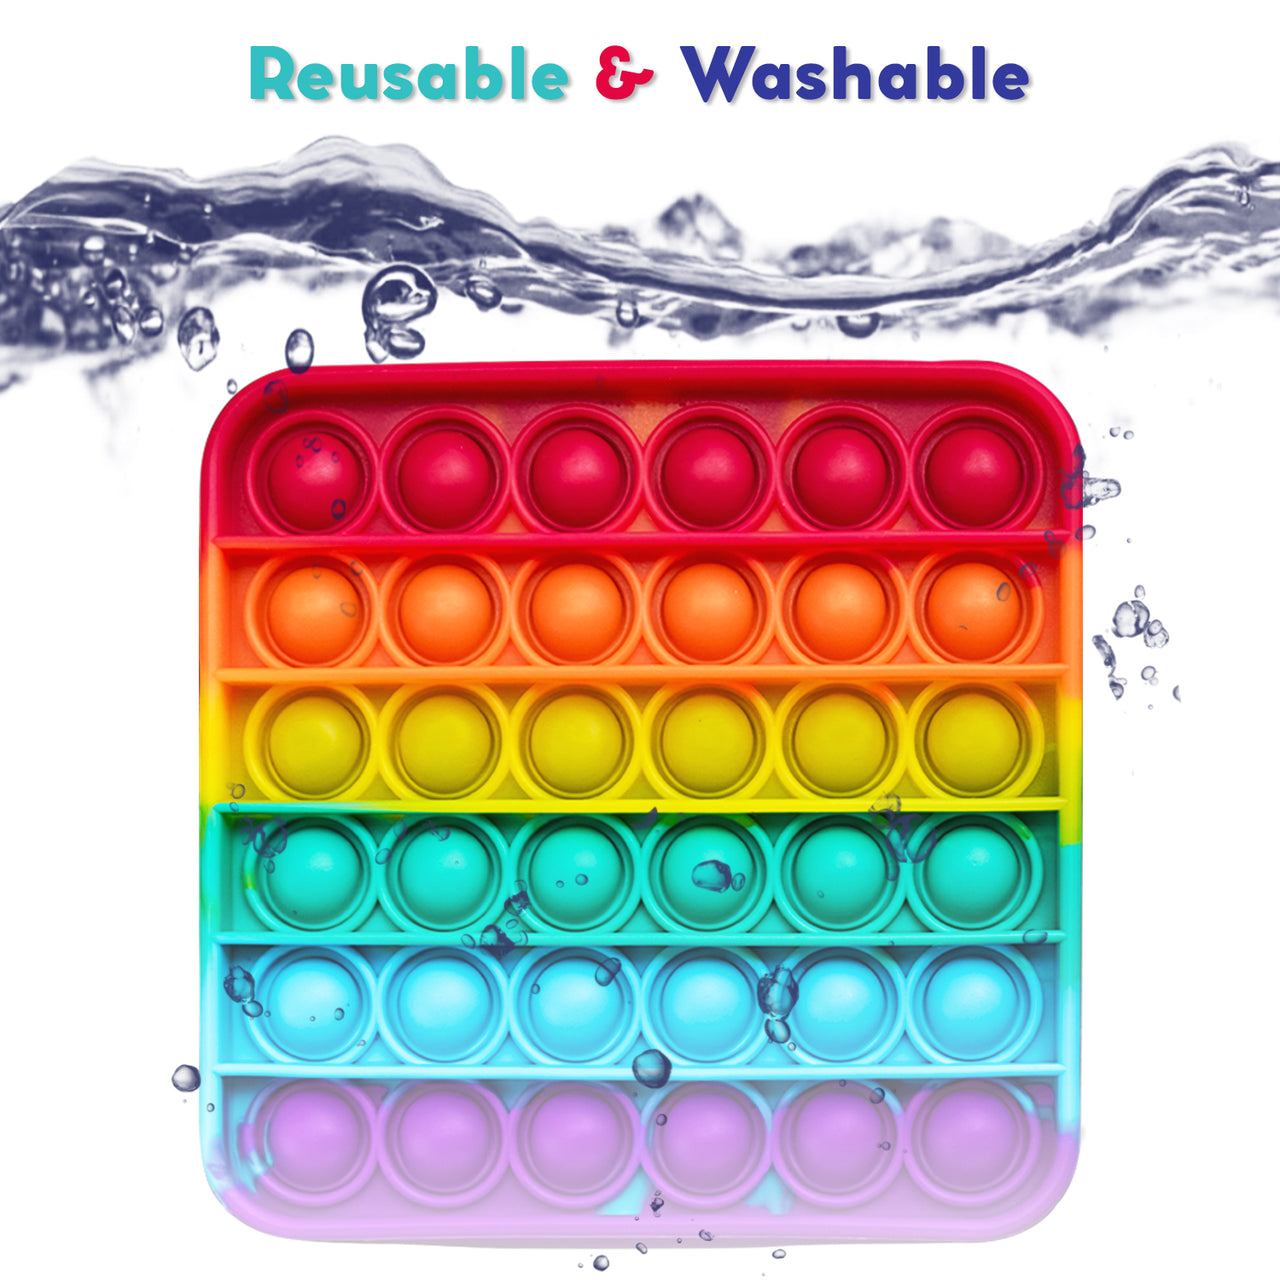 Reusable and washable